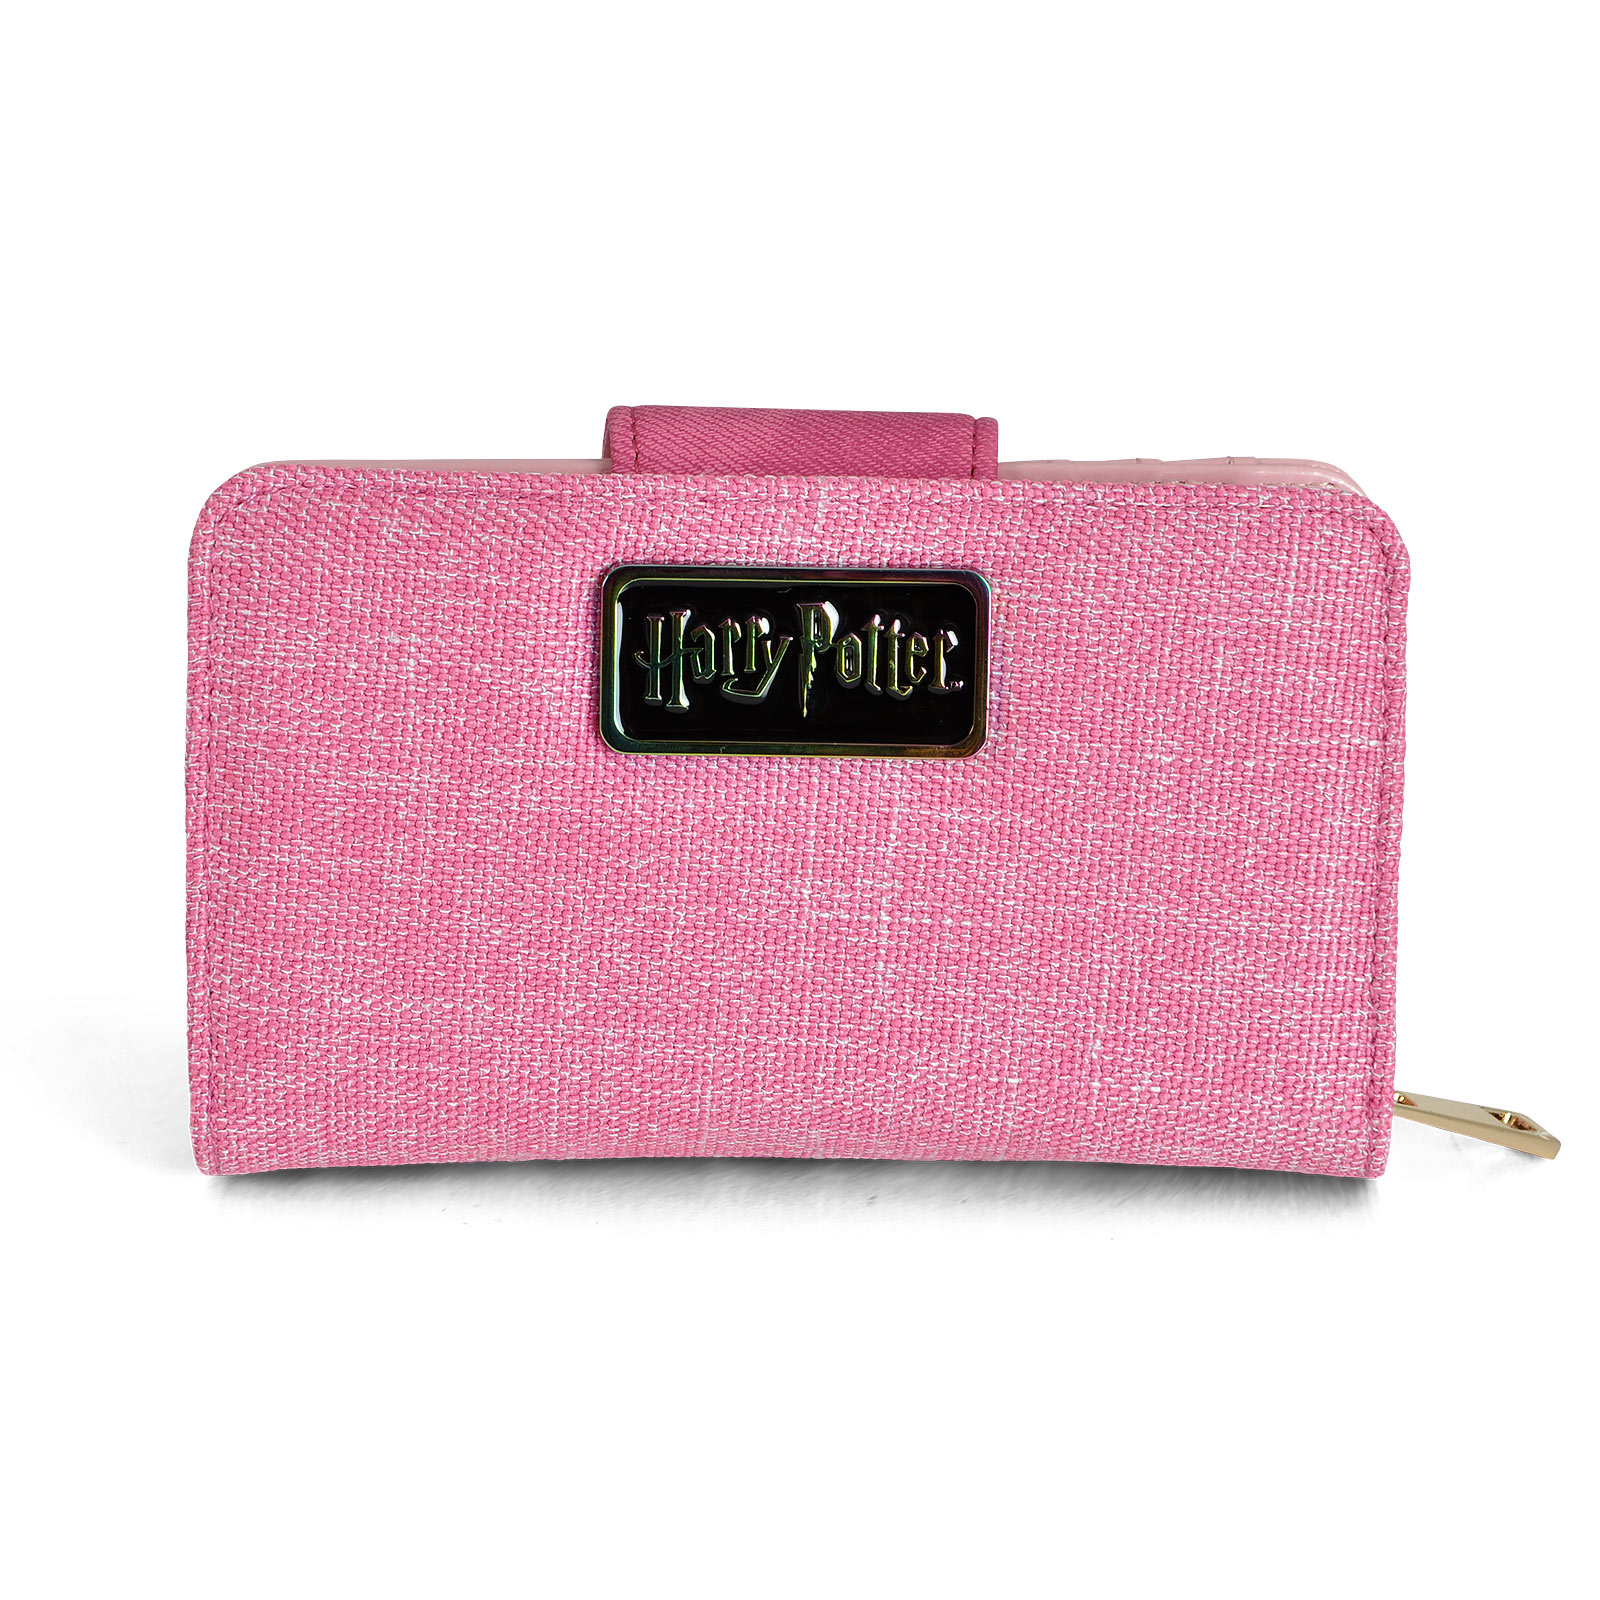 Harry Potter - Luna Lovegood Wallet